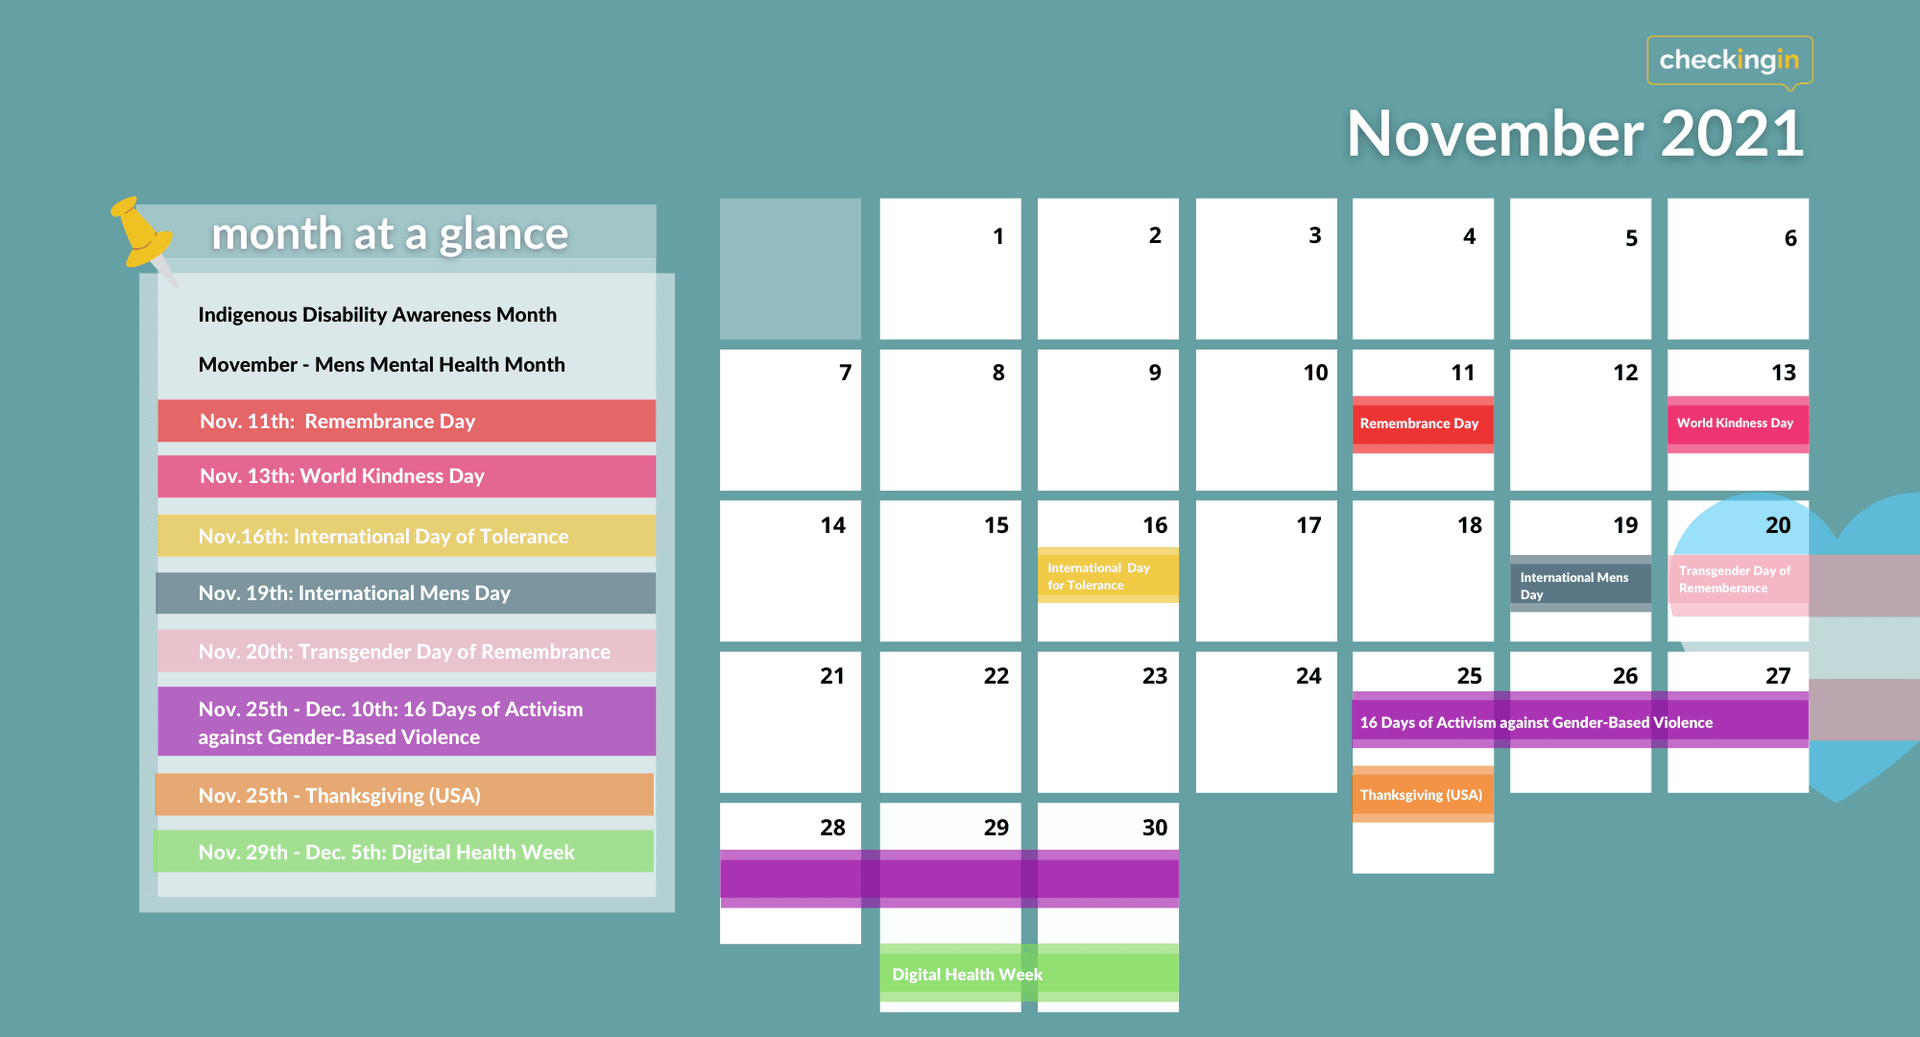 November 2021 Employee Engagement Calendar